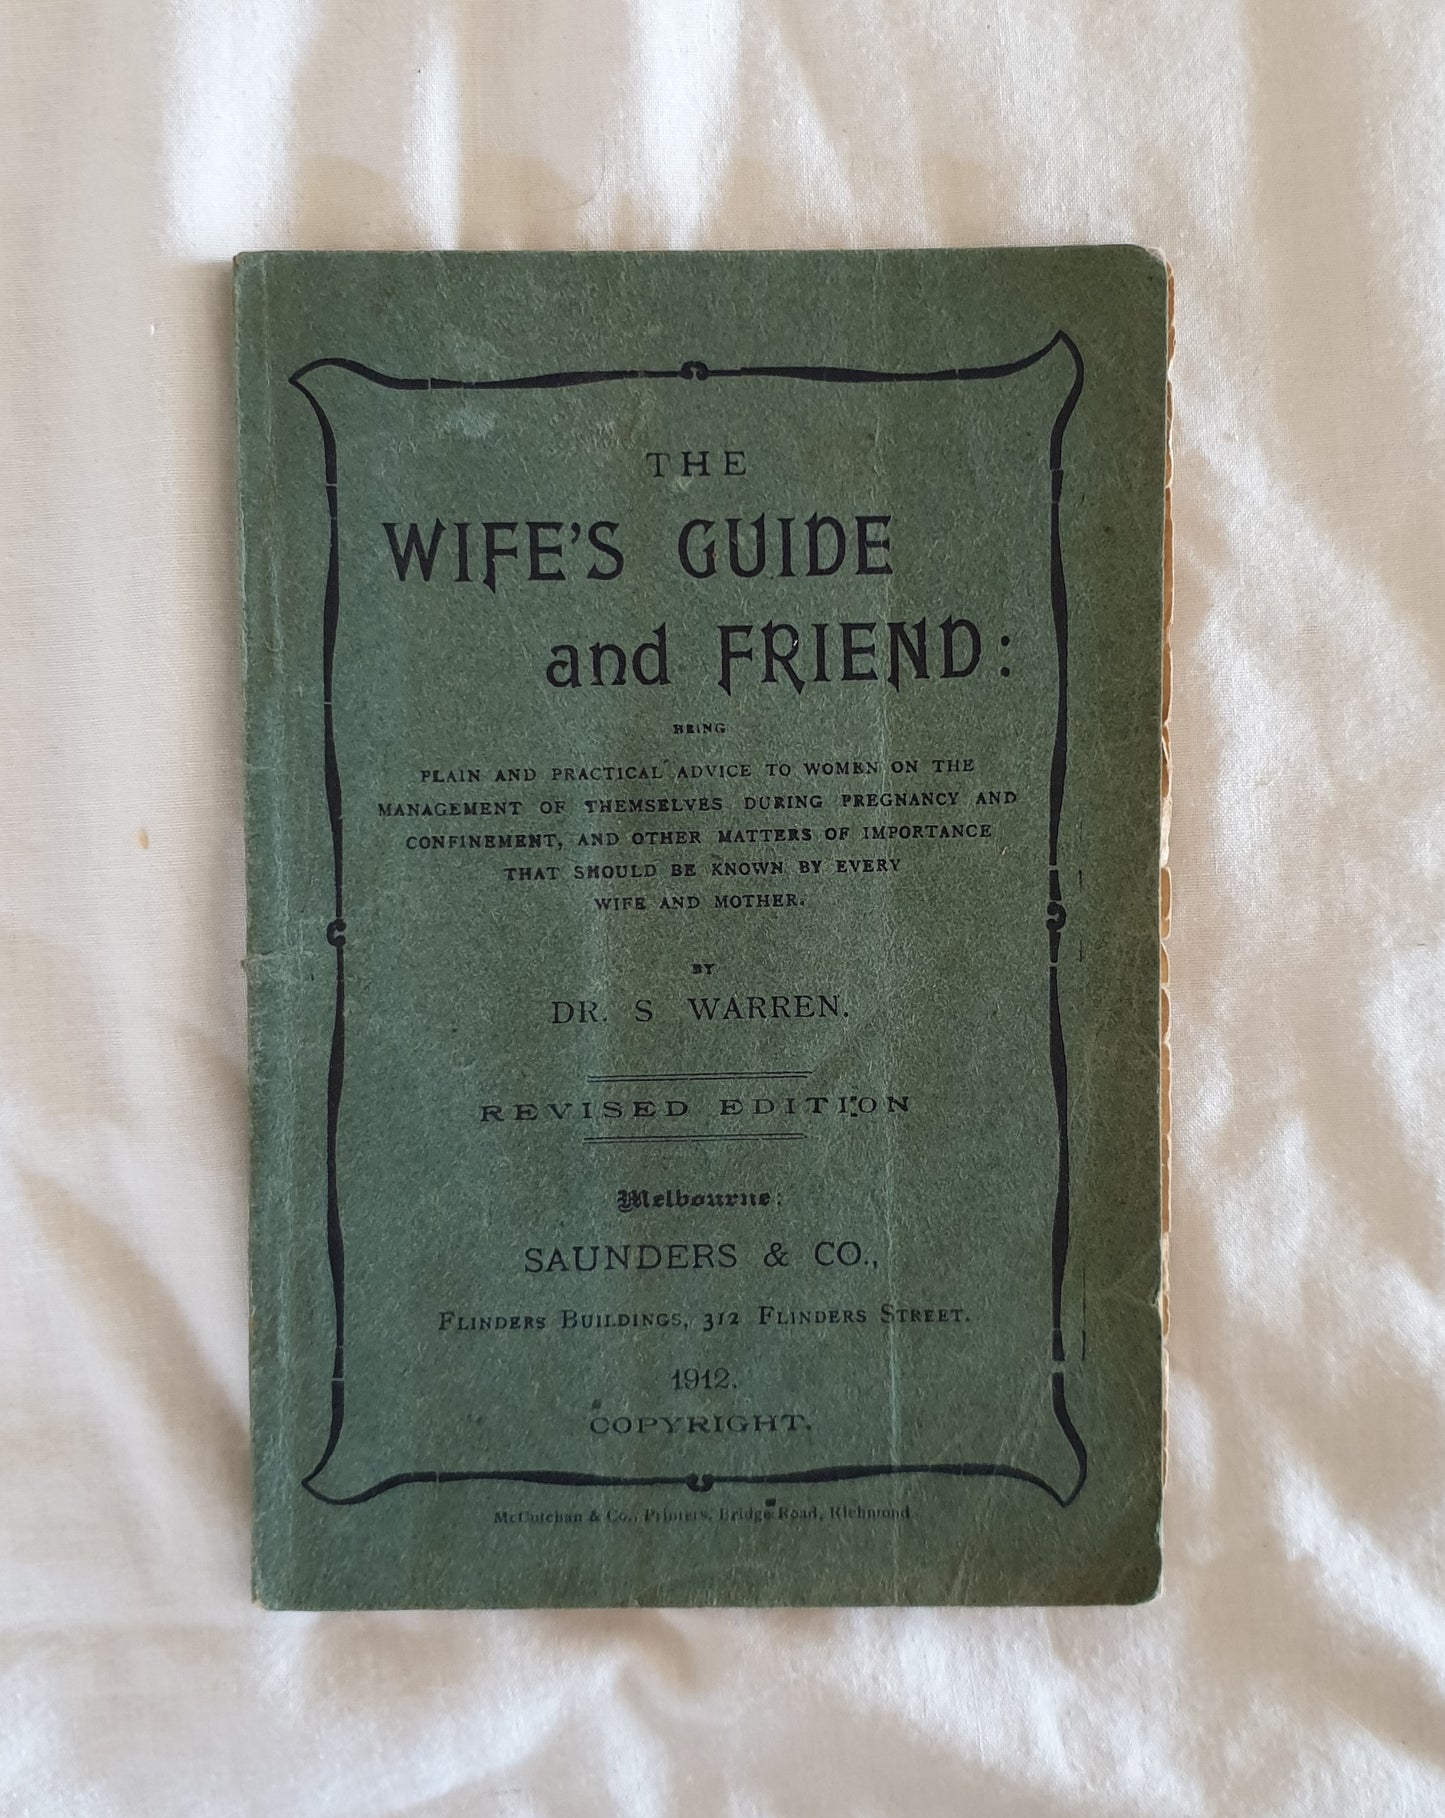 The Wife's Guide & Friend by Dr. S. Warren